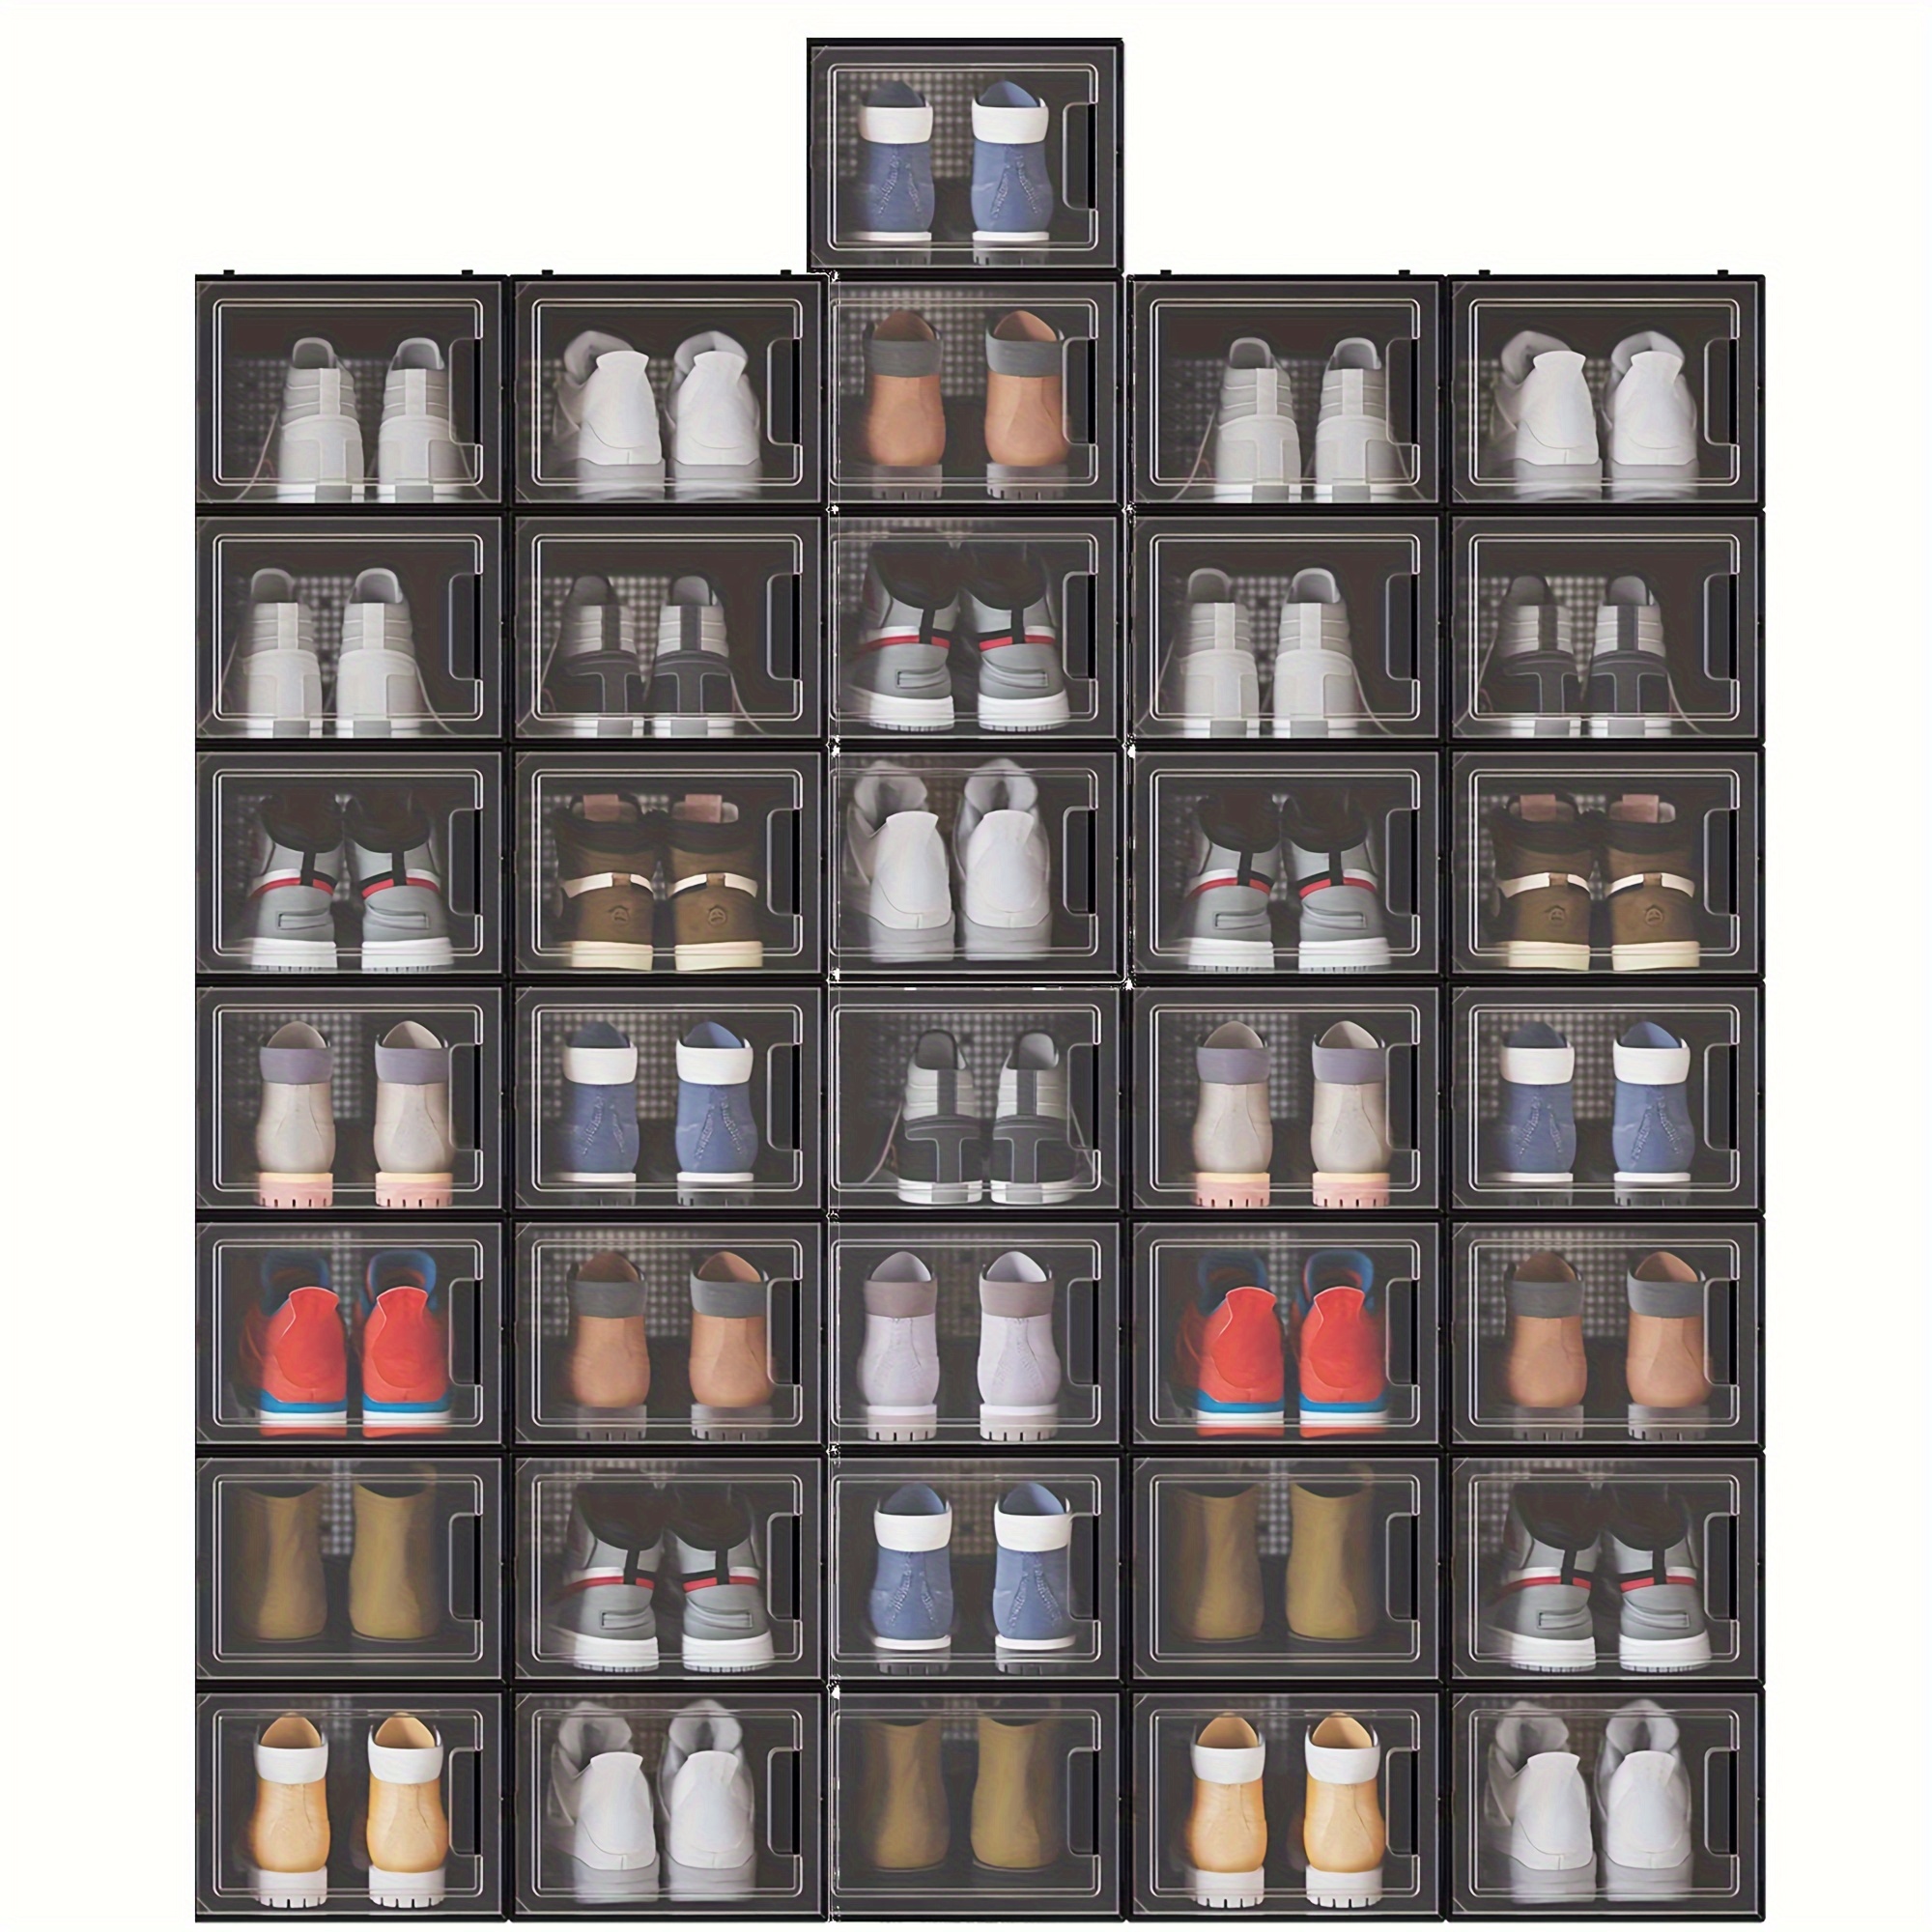 

36 Pcs Xl Shoe Storage Box Large Shoe Organizer Storage Stackable Shoe Box Rack Containers Shoe Storage Containers For Closet Clothes Kids Toy Under Bed Black